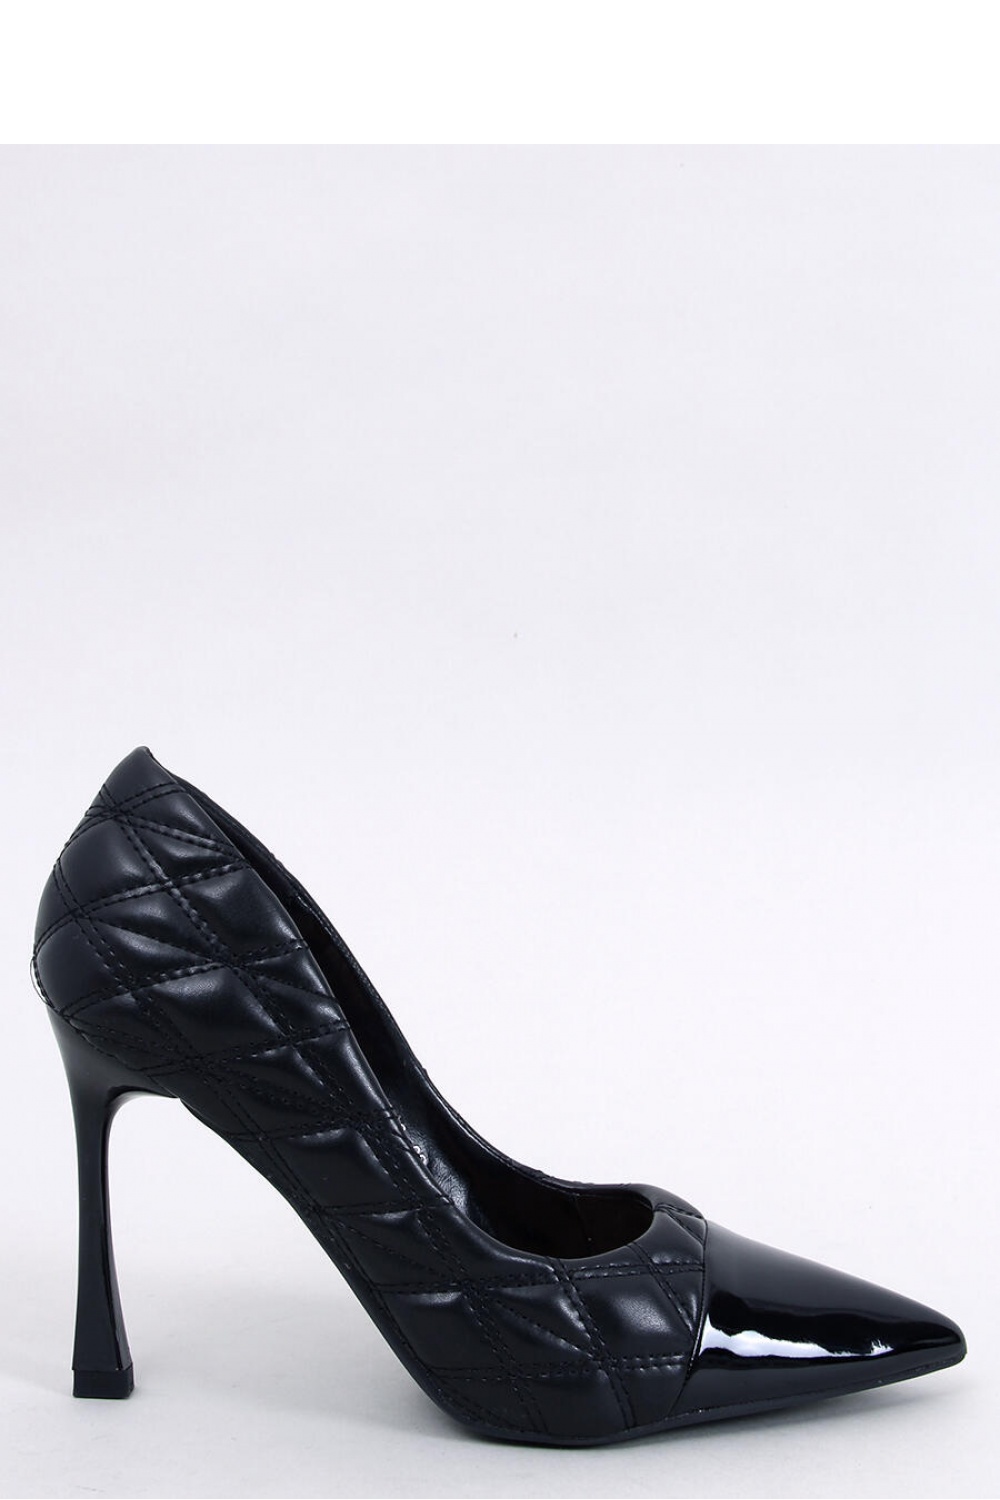 Strappy high heels model 19274..